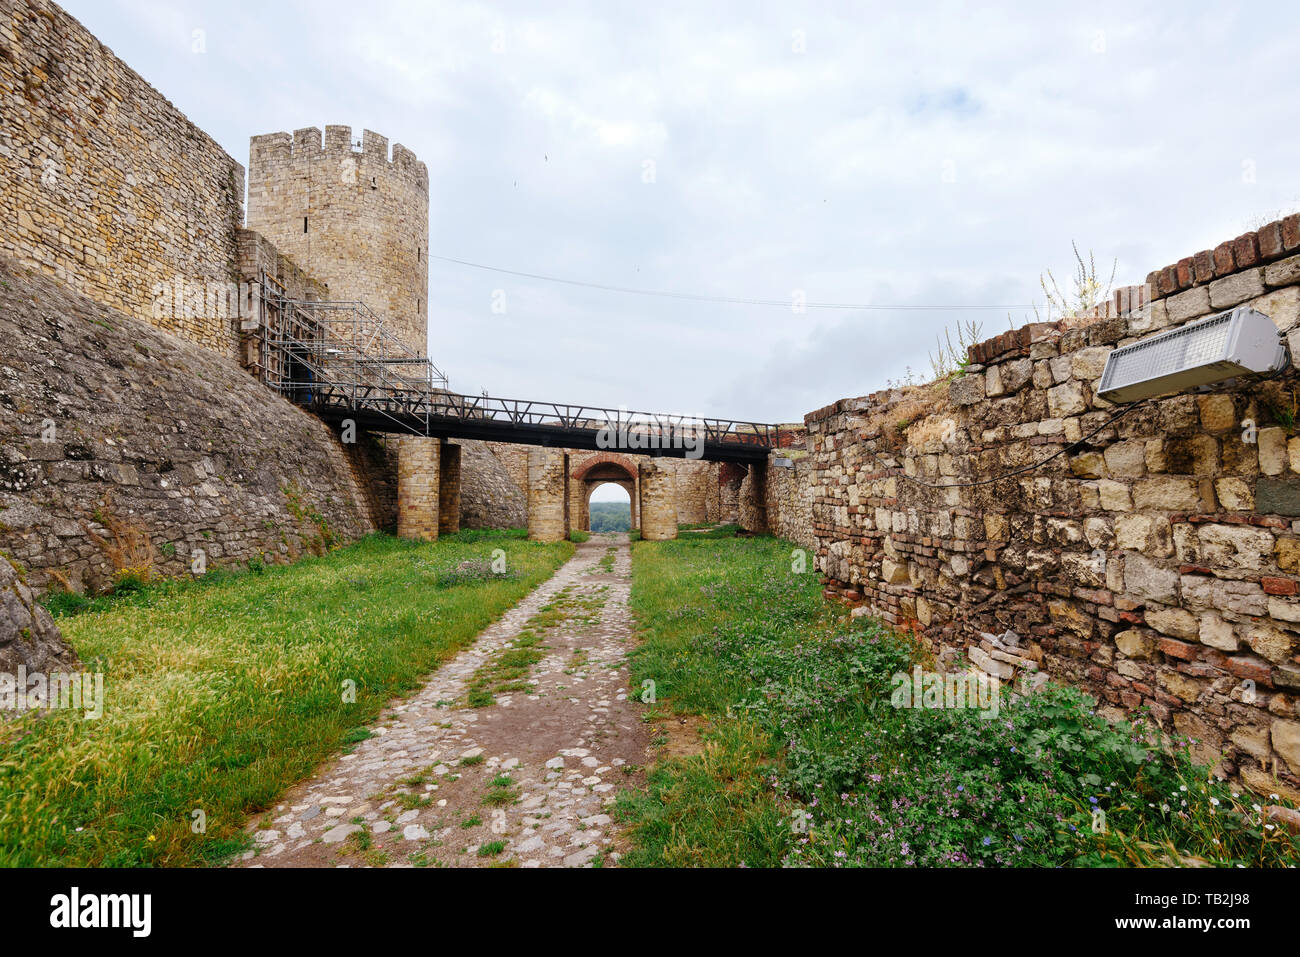 Belgrade, Serbia - June 16, 2018. Belgrade fortress Kalemegdan, fortification walls with ruins, bridge and tower buildings. Serbian medieval citadel,  Stock Photo